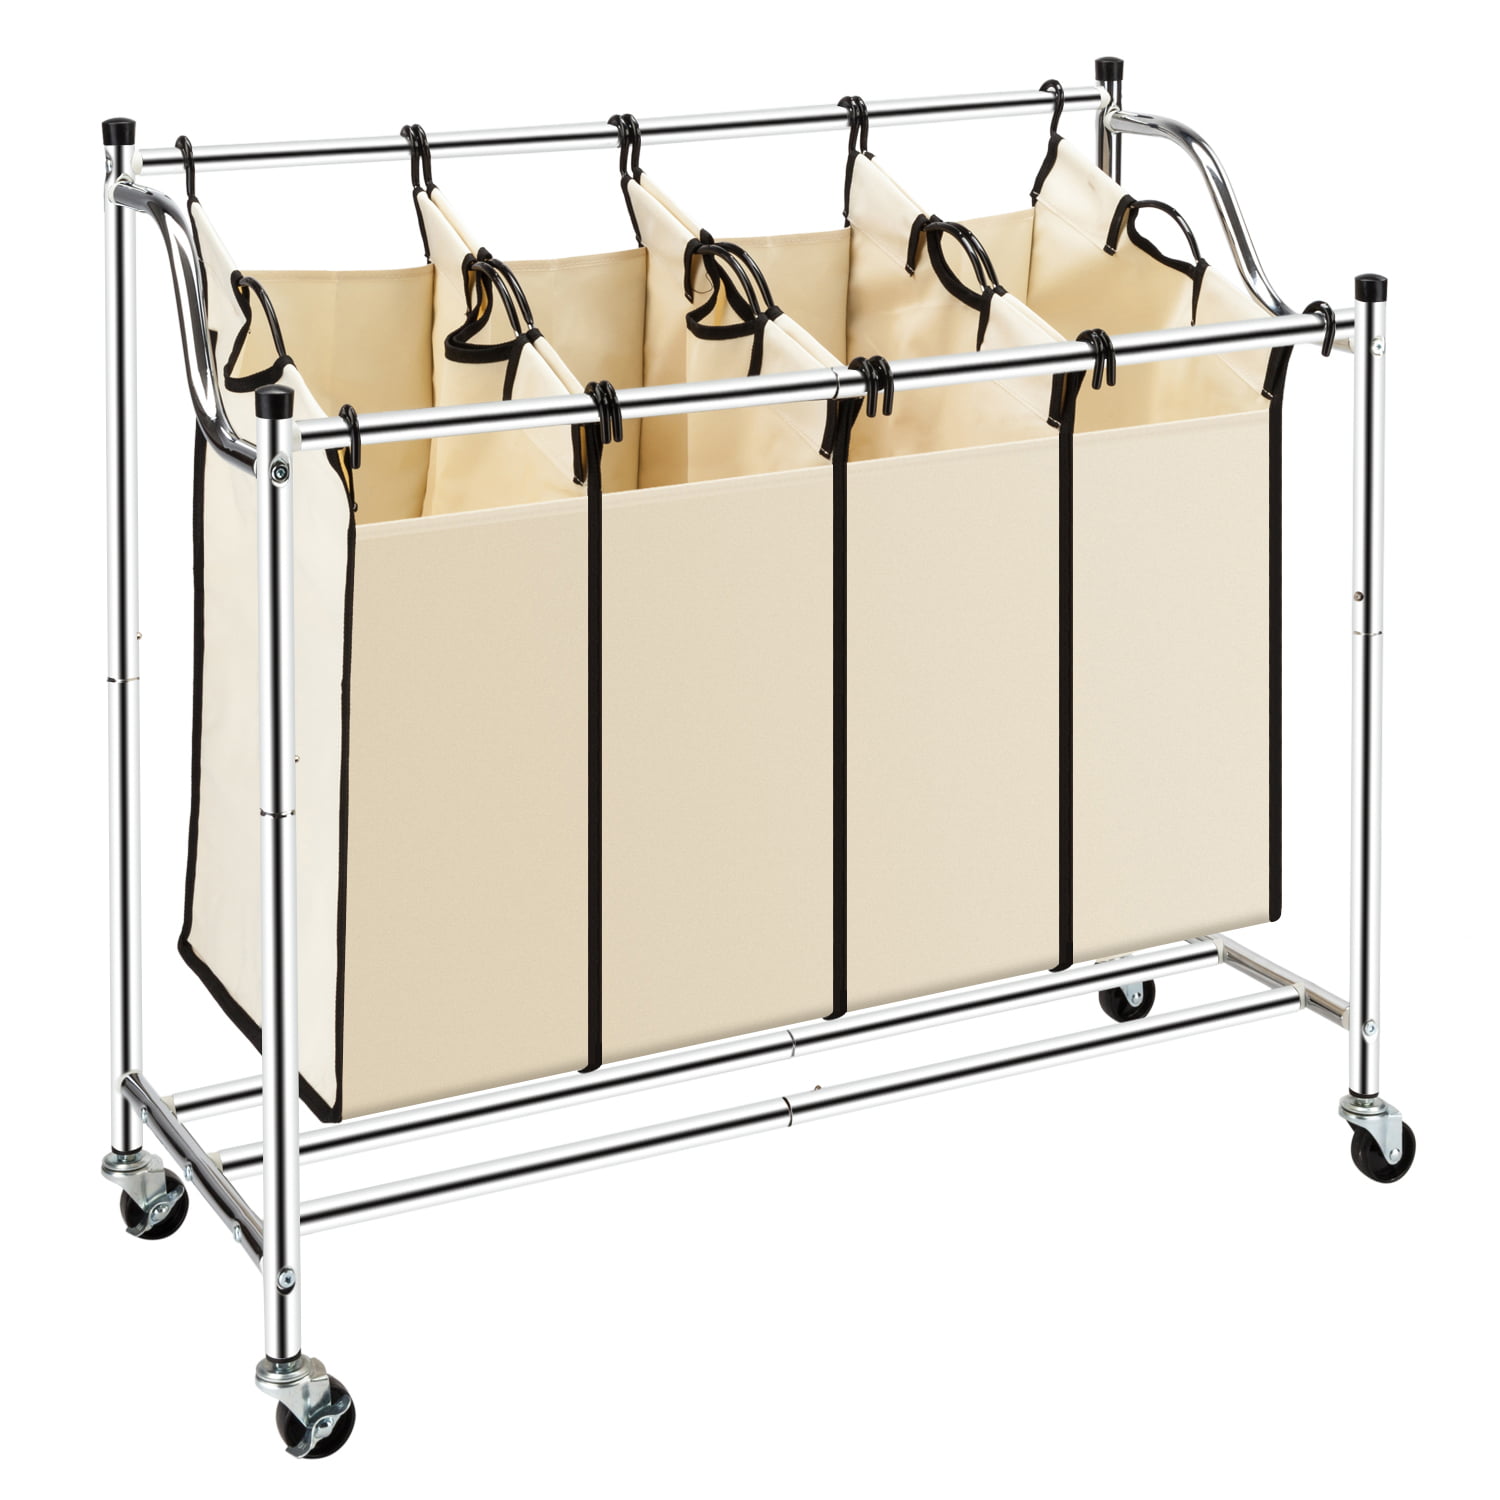 Details about   Laundry Cart 3 Bag Hamper Rolling Clothes Sorter Organizer Hanging Bar Storage 